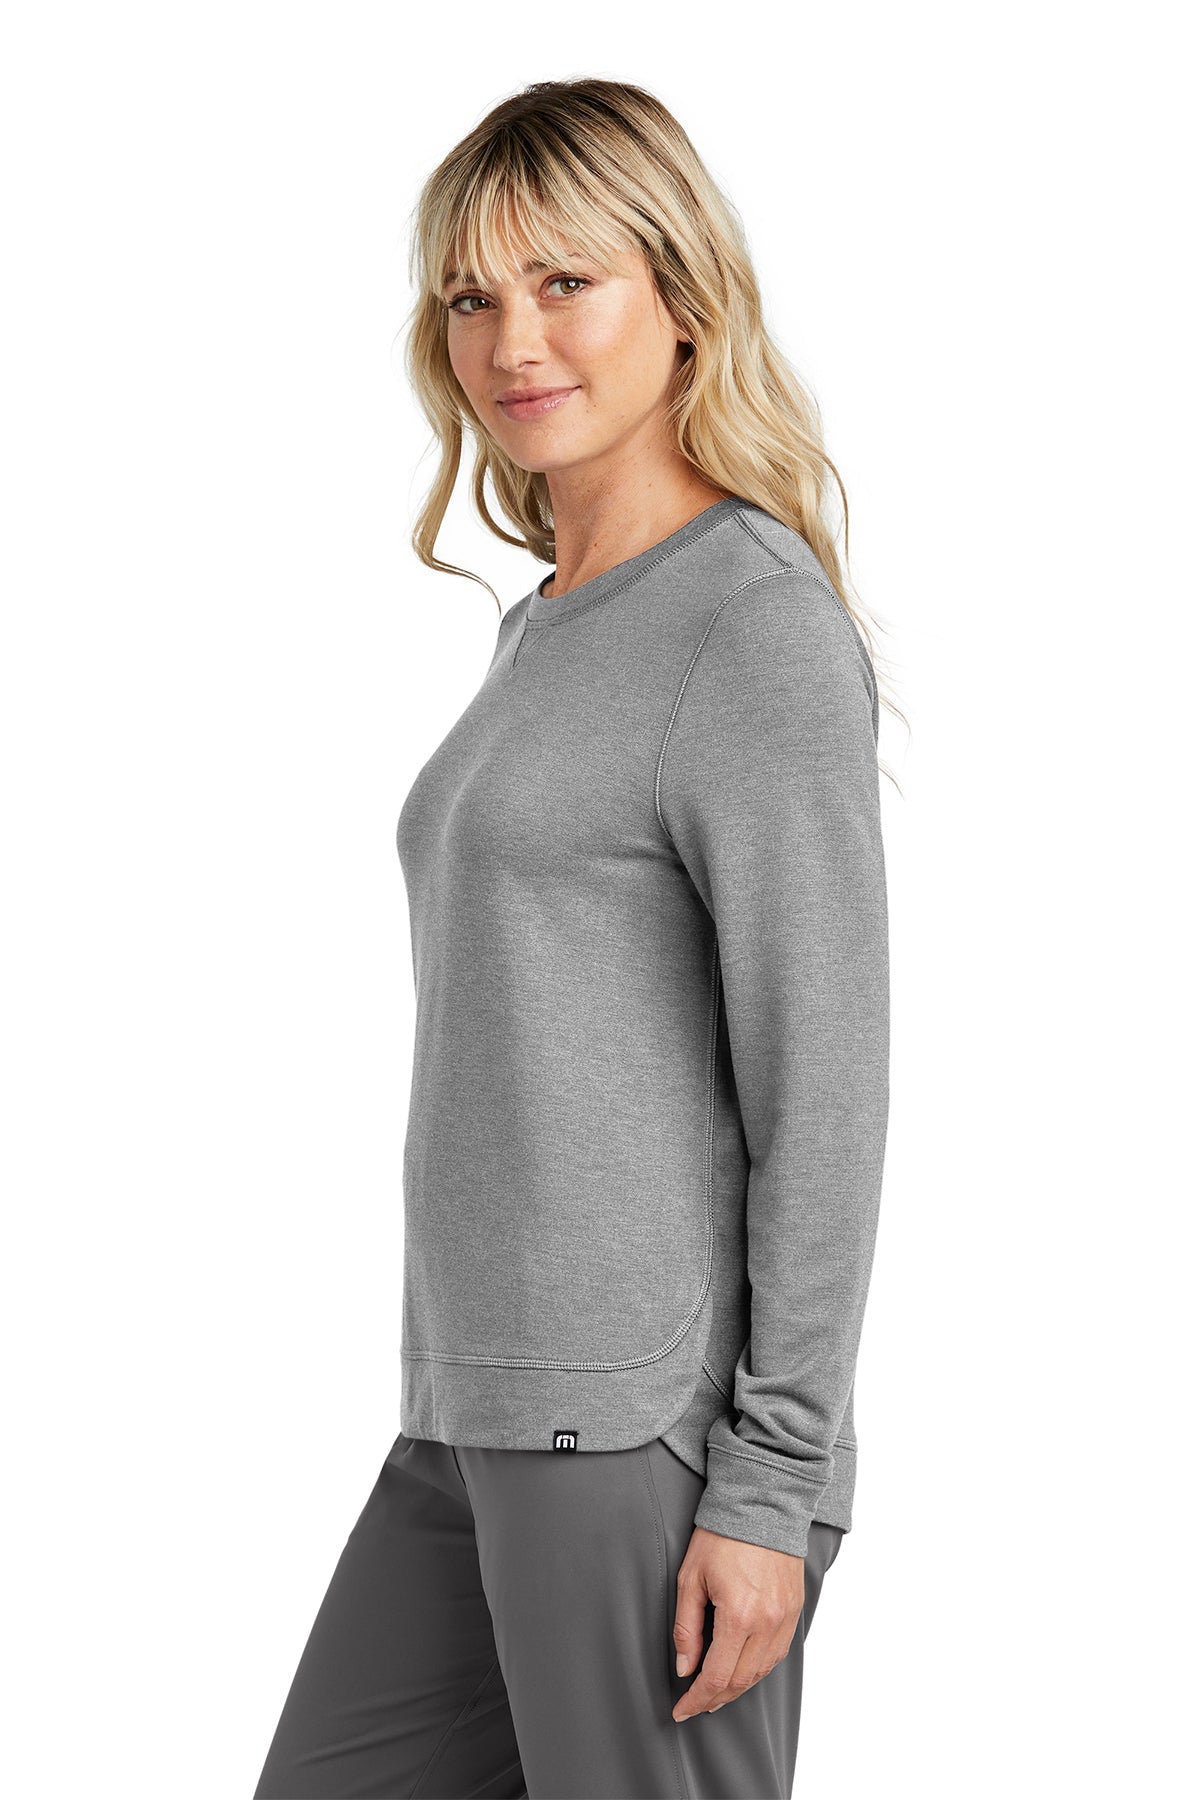 TravisMathew Ladies Custom Crew Sweatshirts, Light Grey Heather